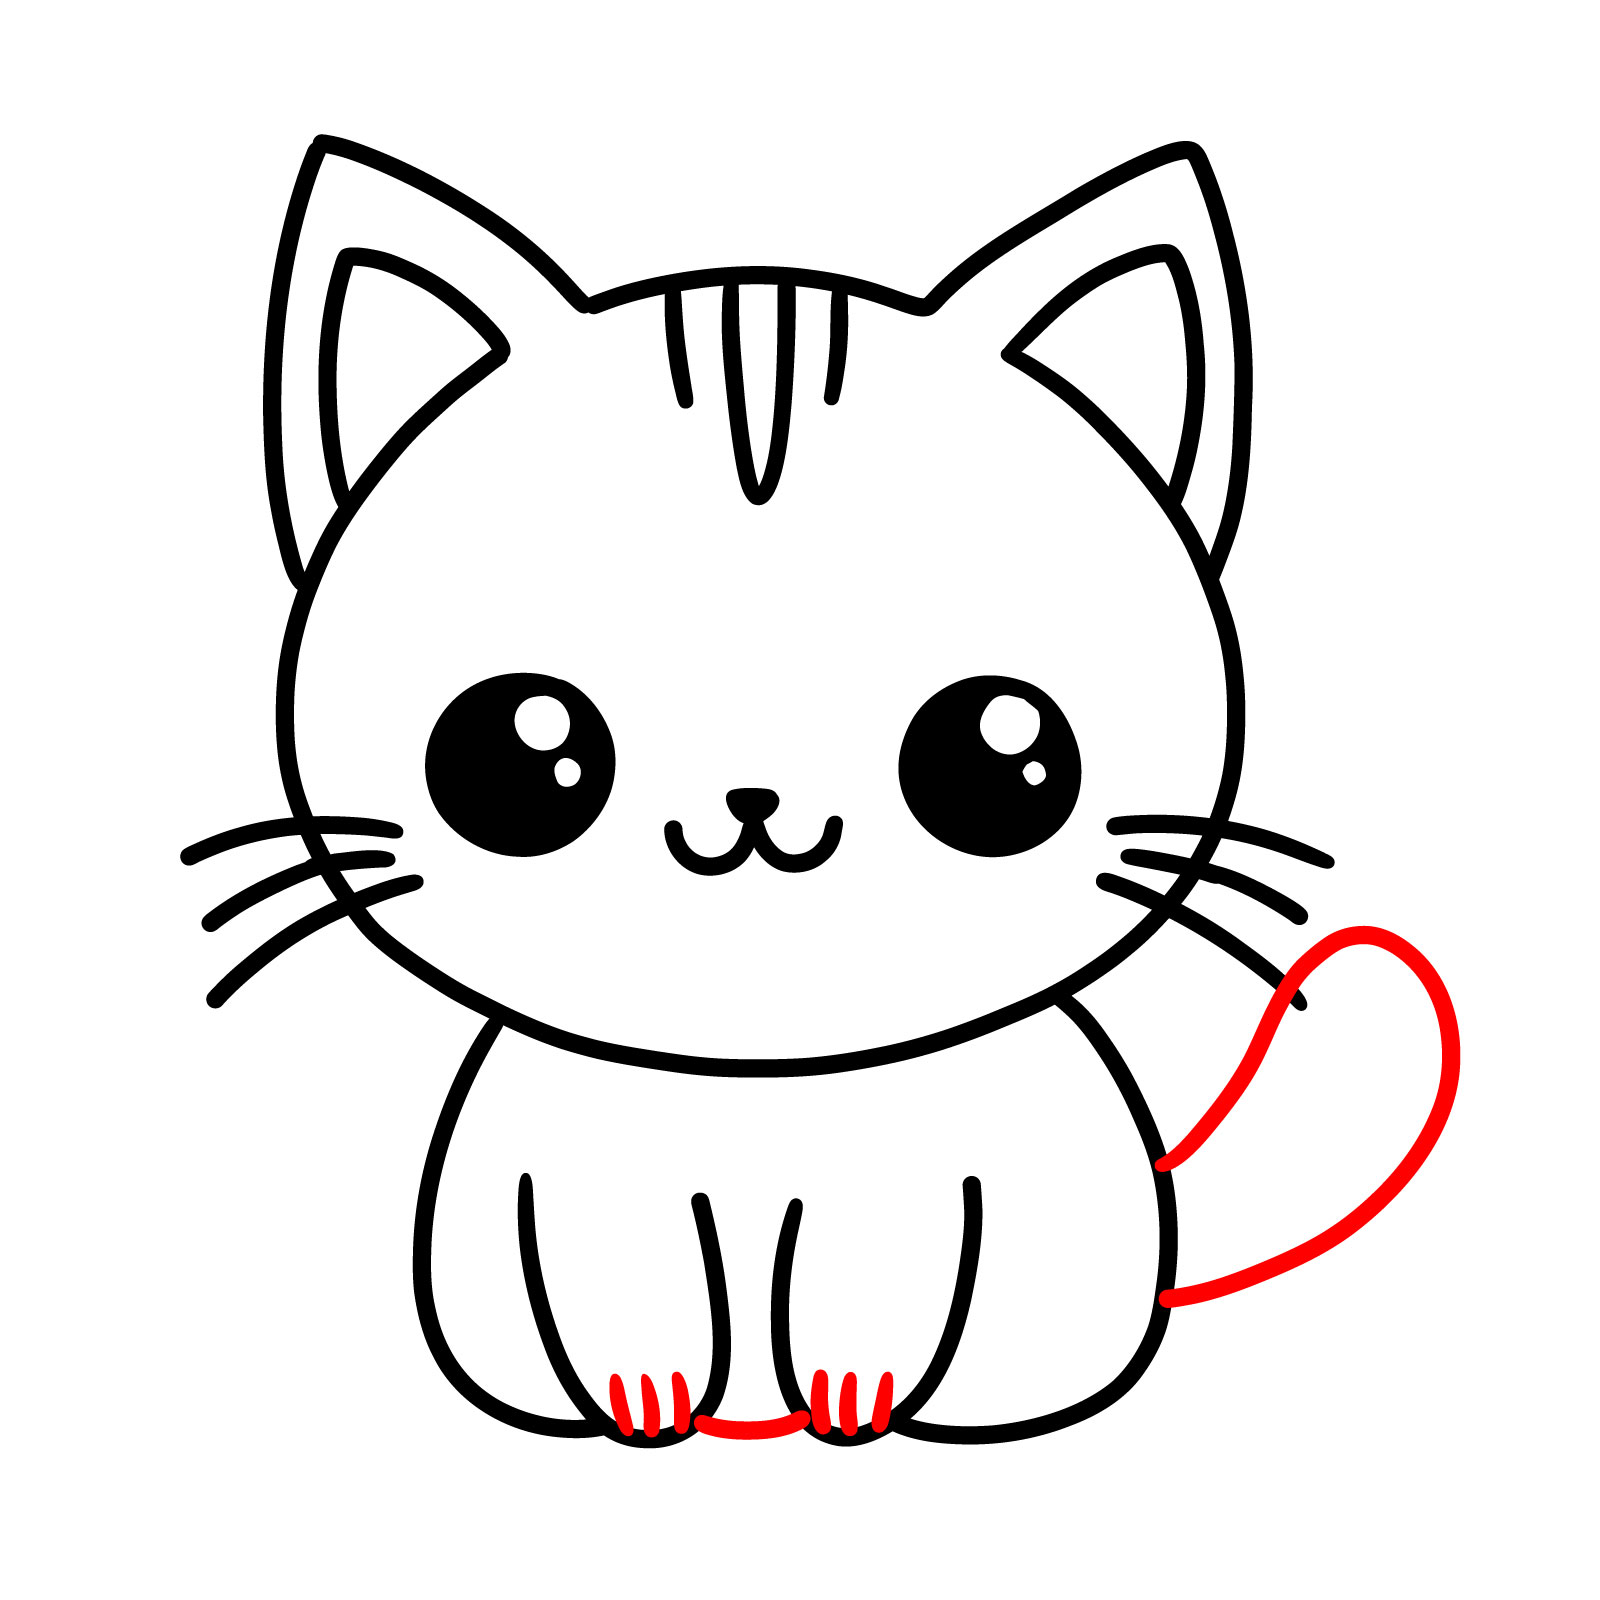 How to draw a Kawaii Cat - step 06